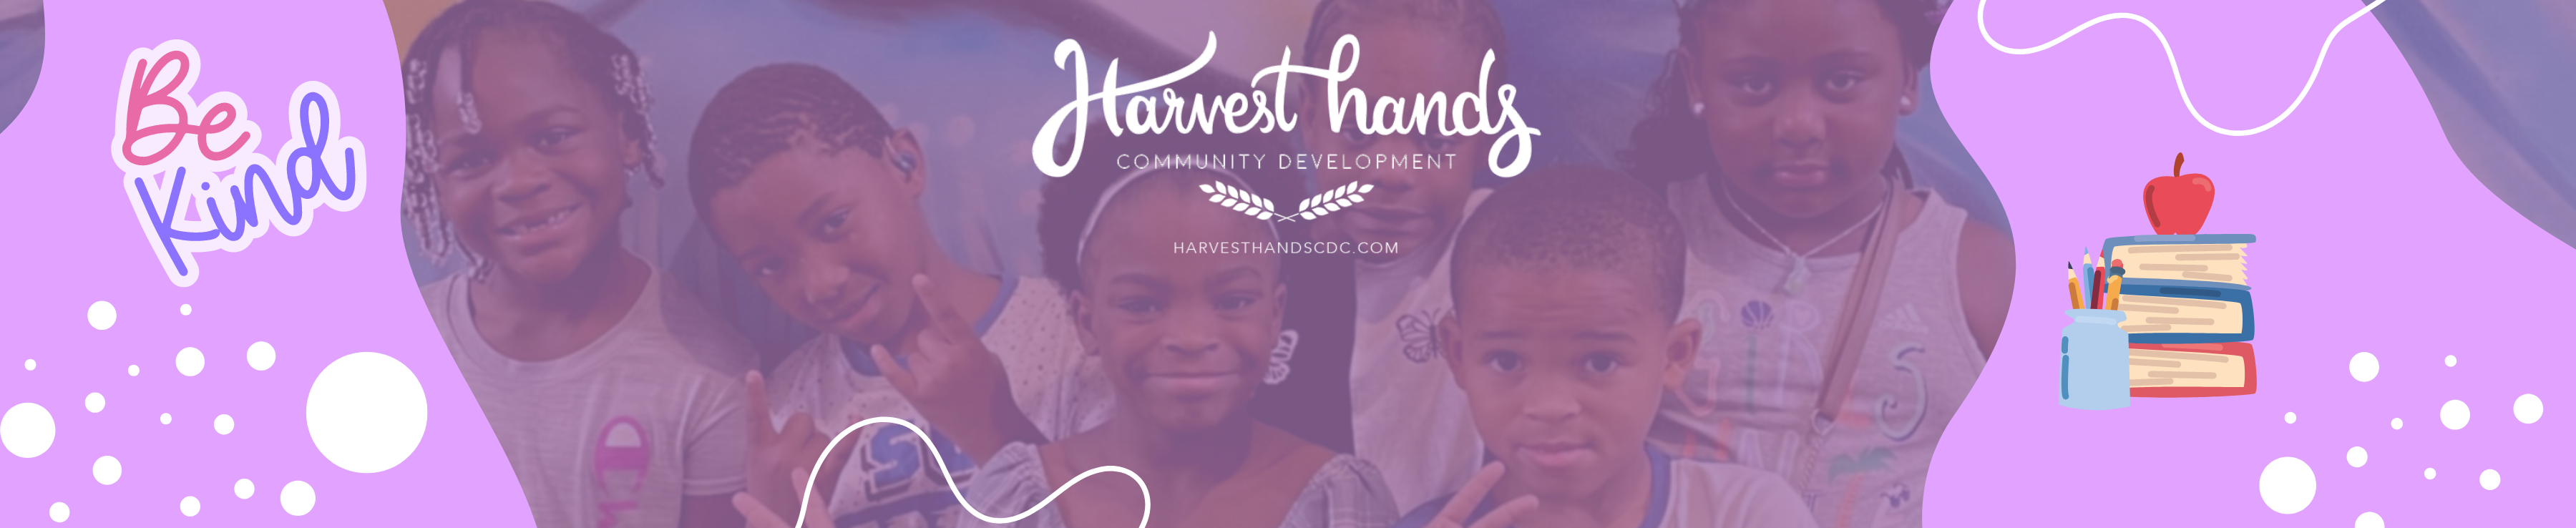 harvest hands